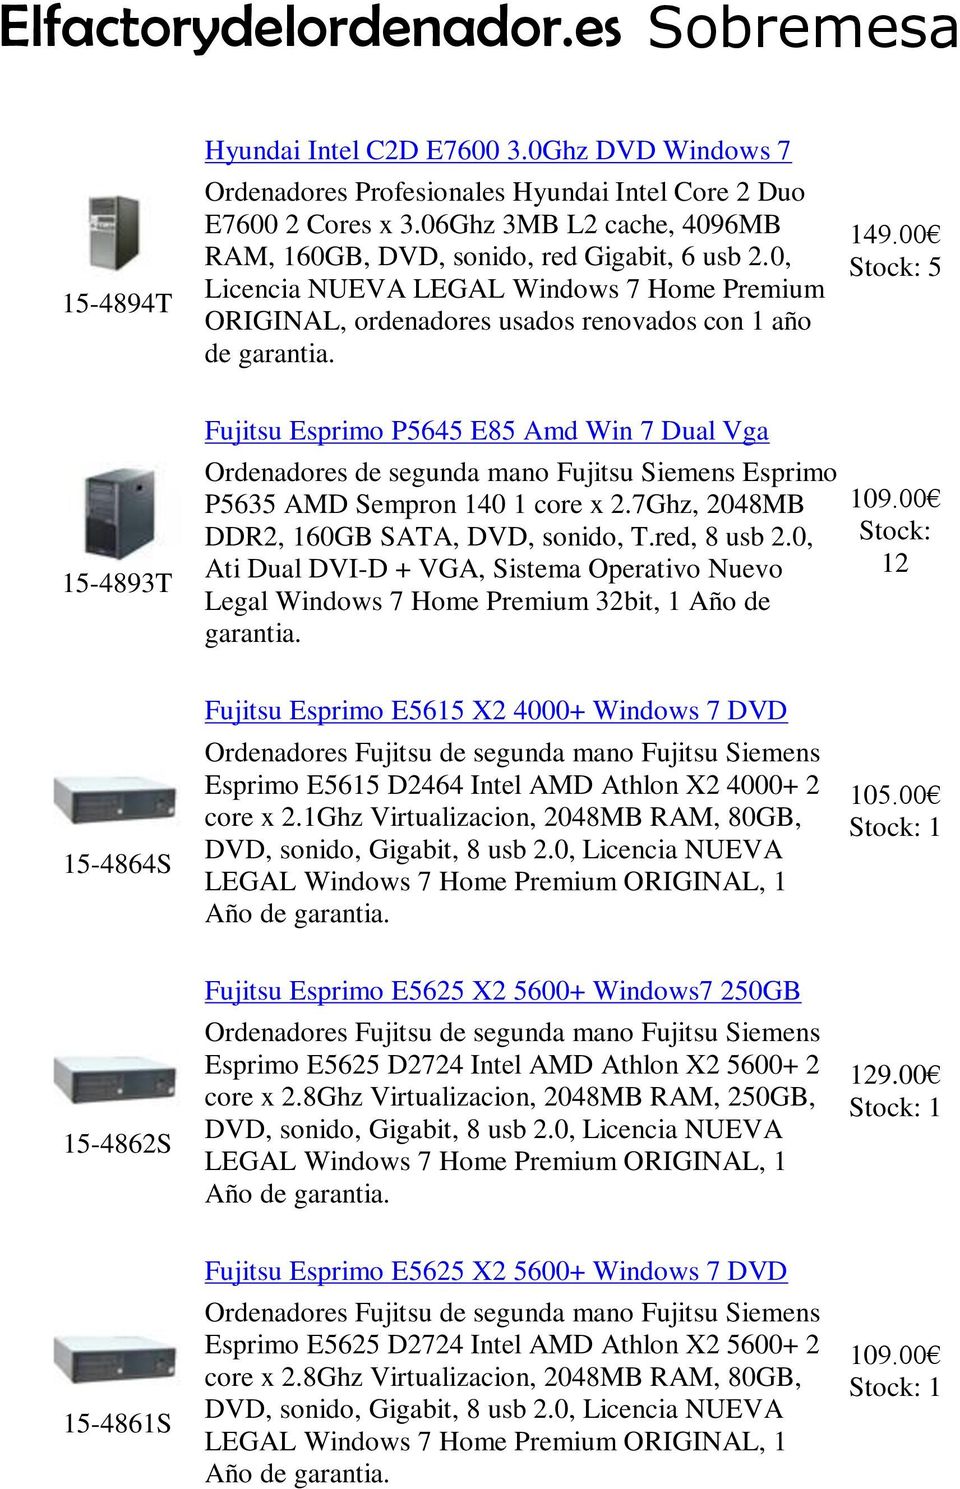 00 5 15-4893T Fujitsu Esprimo P5645 E85 Amd Win 7 Dual Vga Ordenadores de segunda mano Fujitsu Siemens Esprimo P5635 AMD Sempron 140 1 core x 2.7Ghz, 2048MB DDR2, 160GB SATA, DVD, sonido, T.